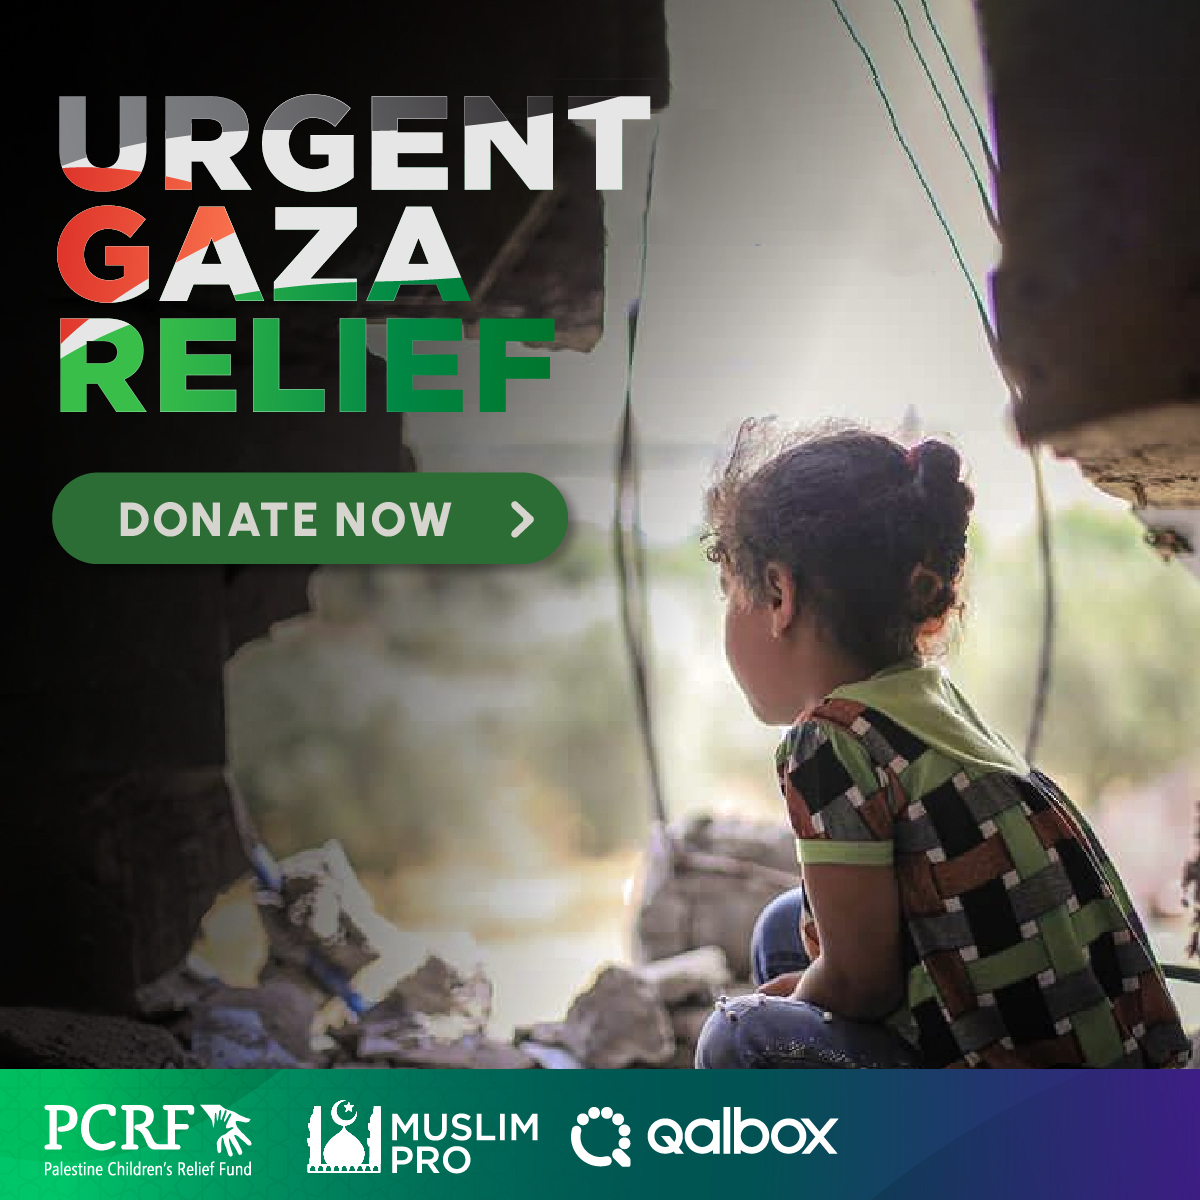 Muslim Pro Partners with Palestine Children’s Relief Fund for Urgent Gaza Humanitarian Aid